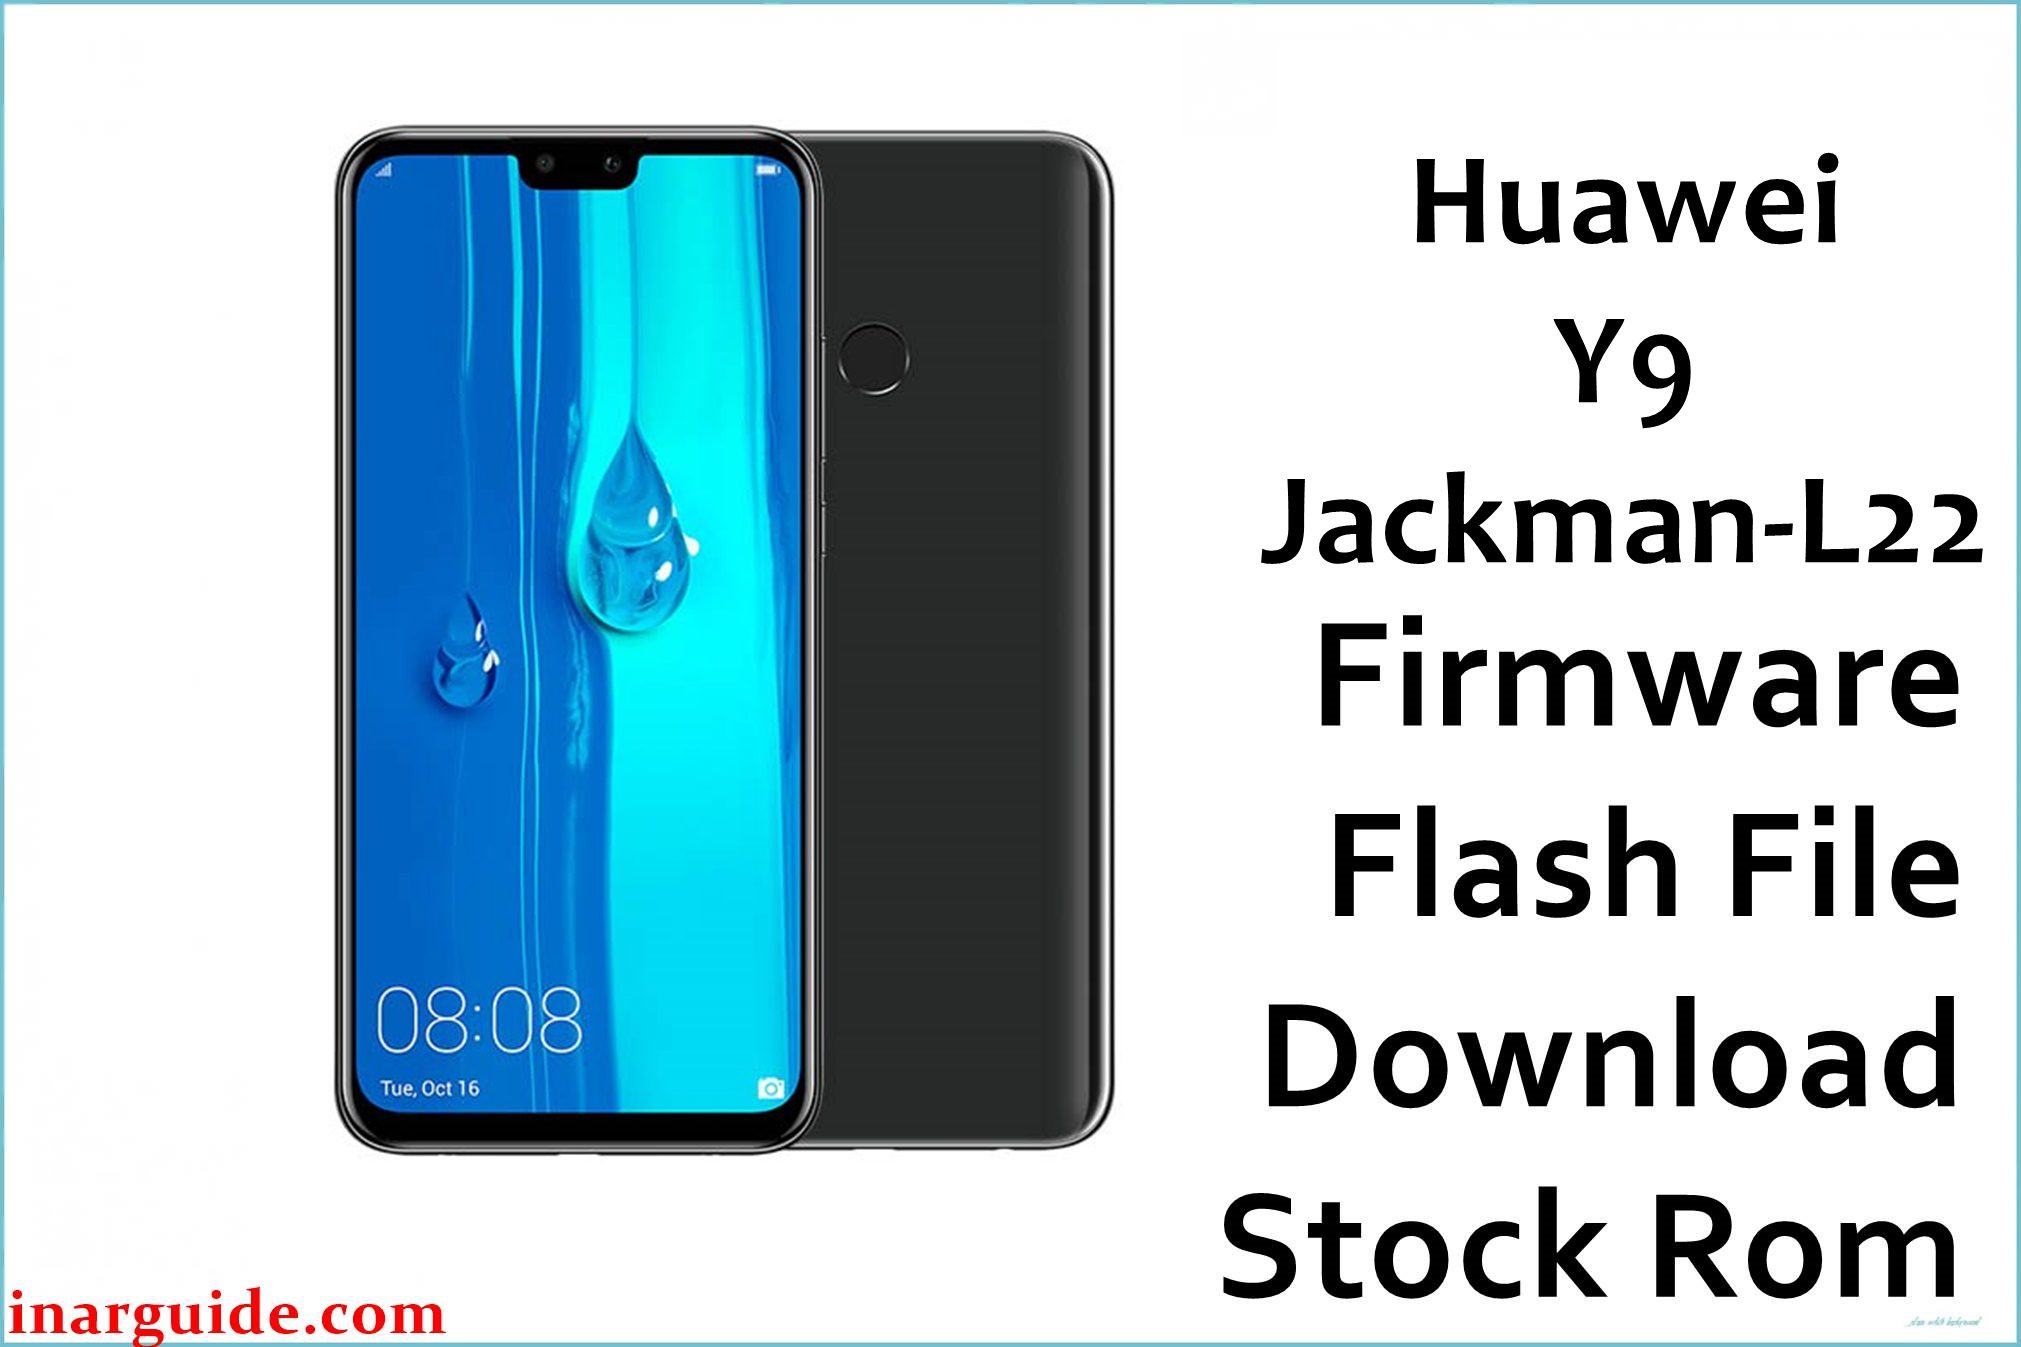 Huawei Y9 Jackman L22